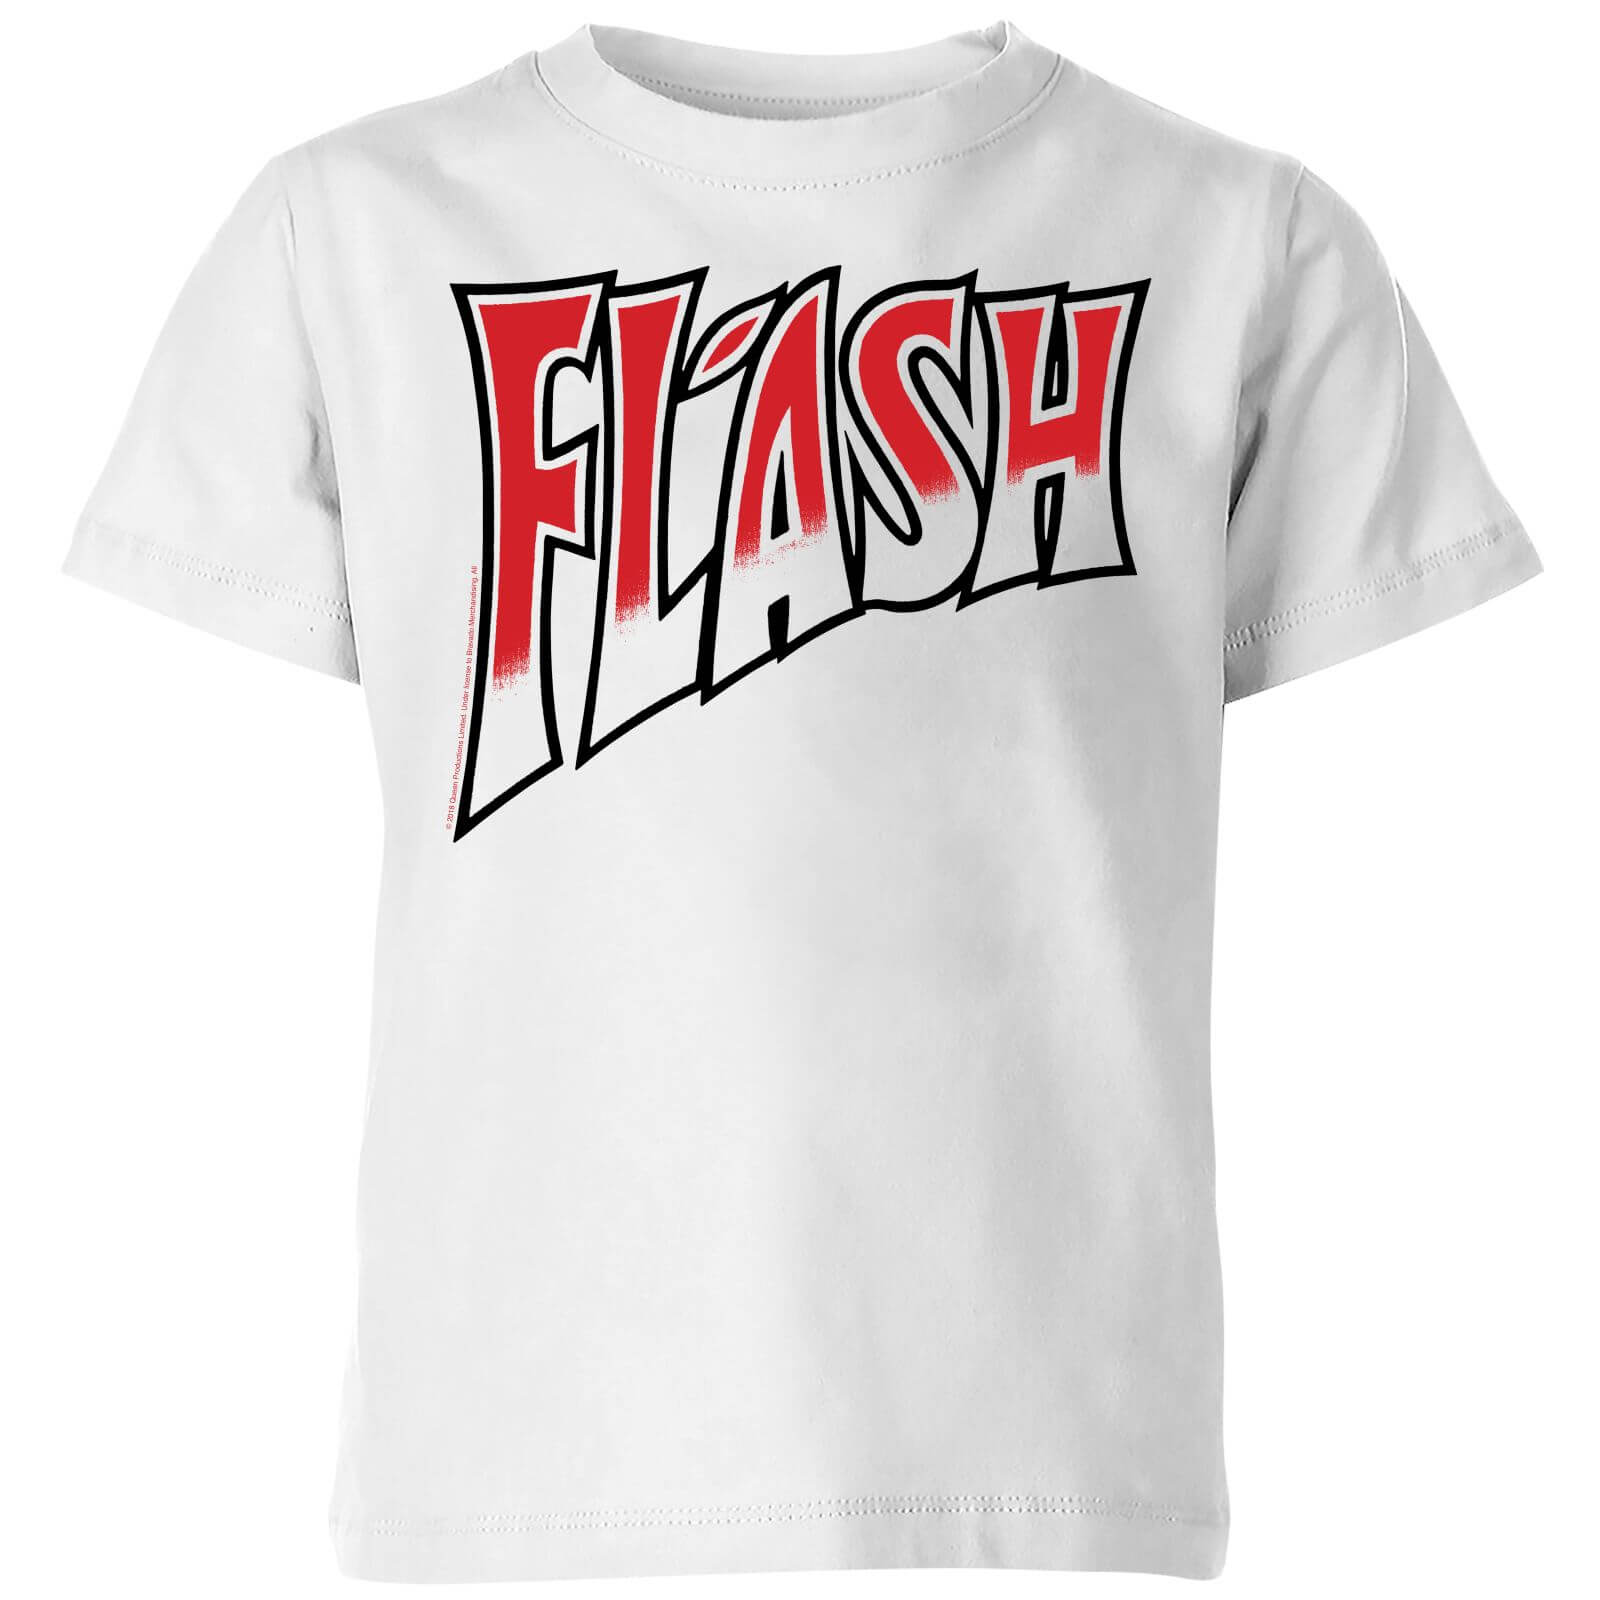 Queen Flash Kids' T-Shirt - White - 7-8 Years